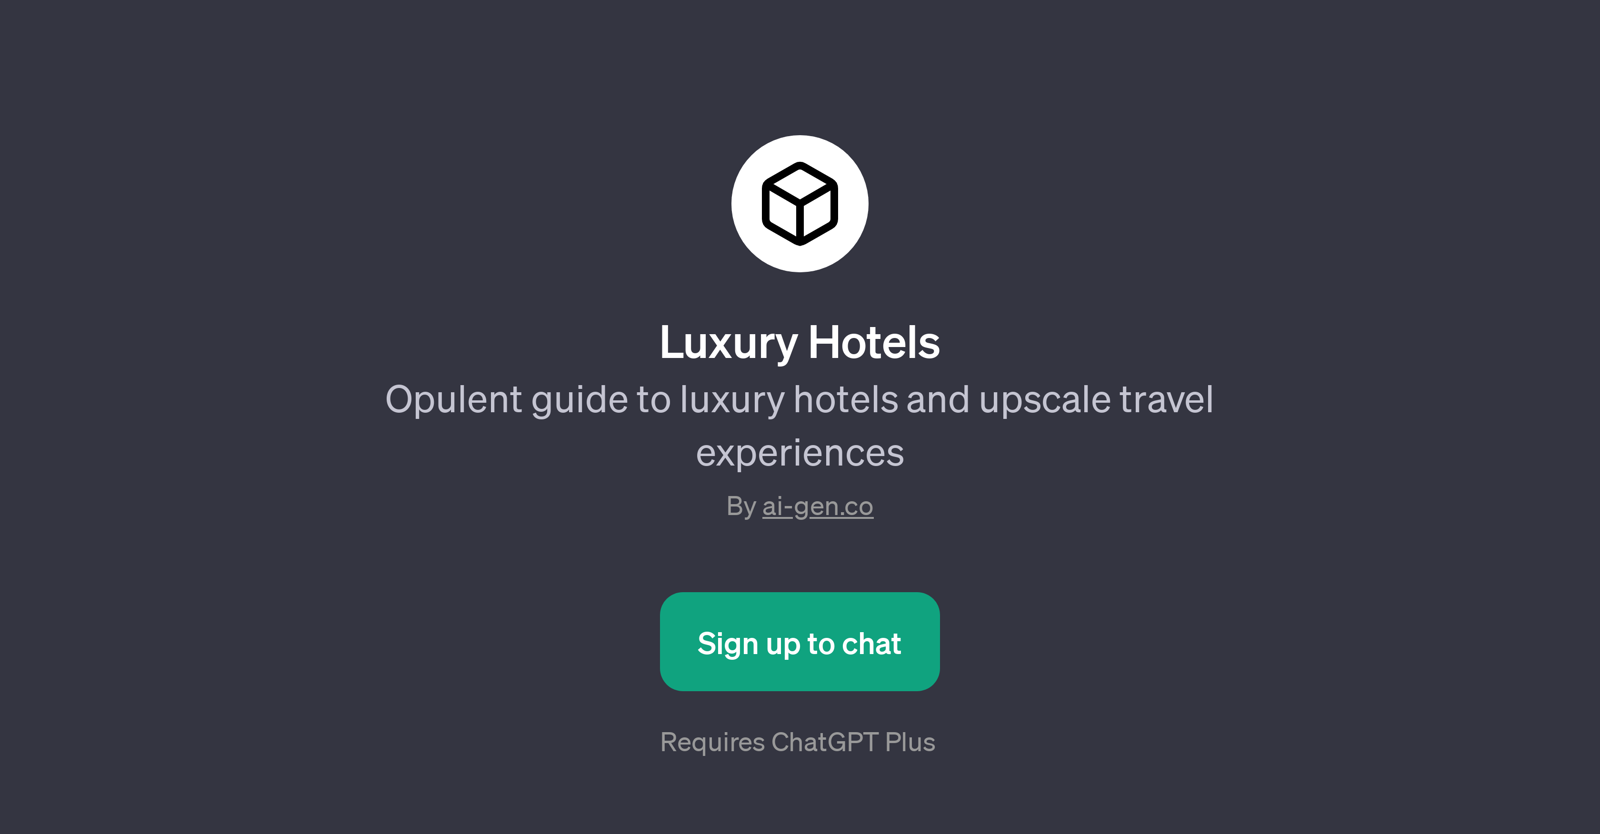 Luxury Hotels website